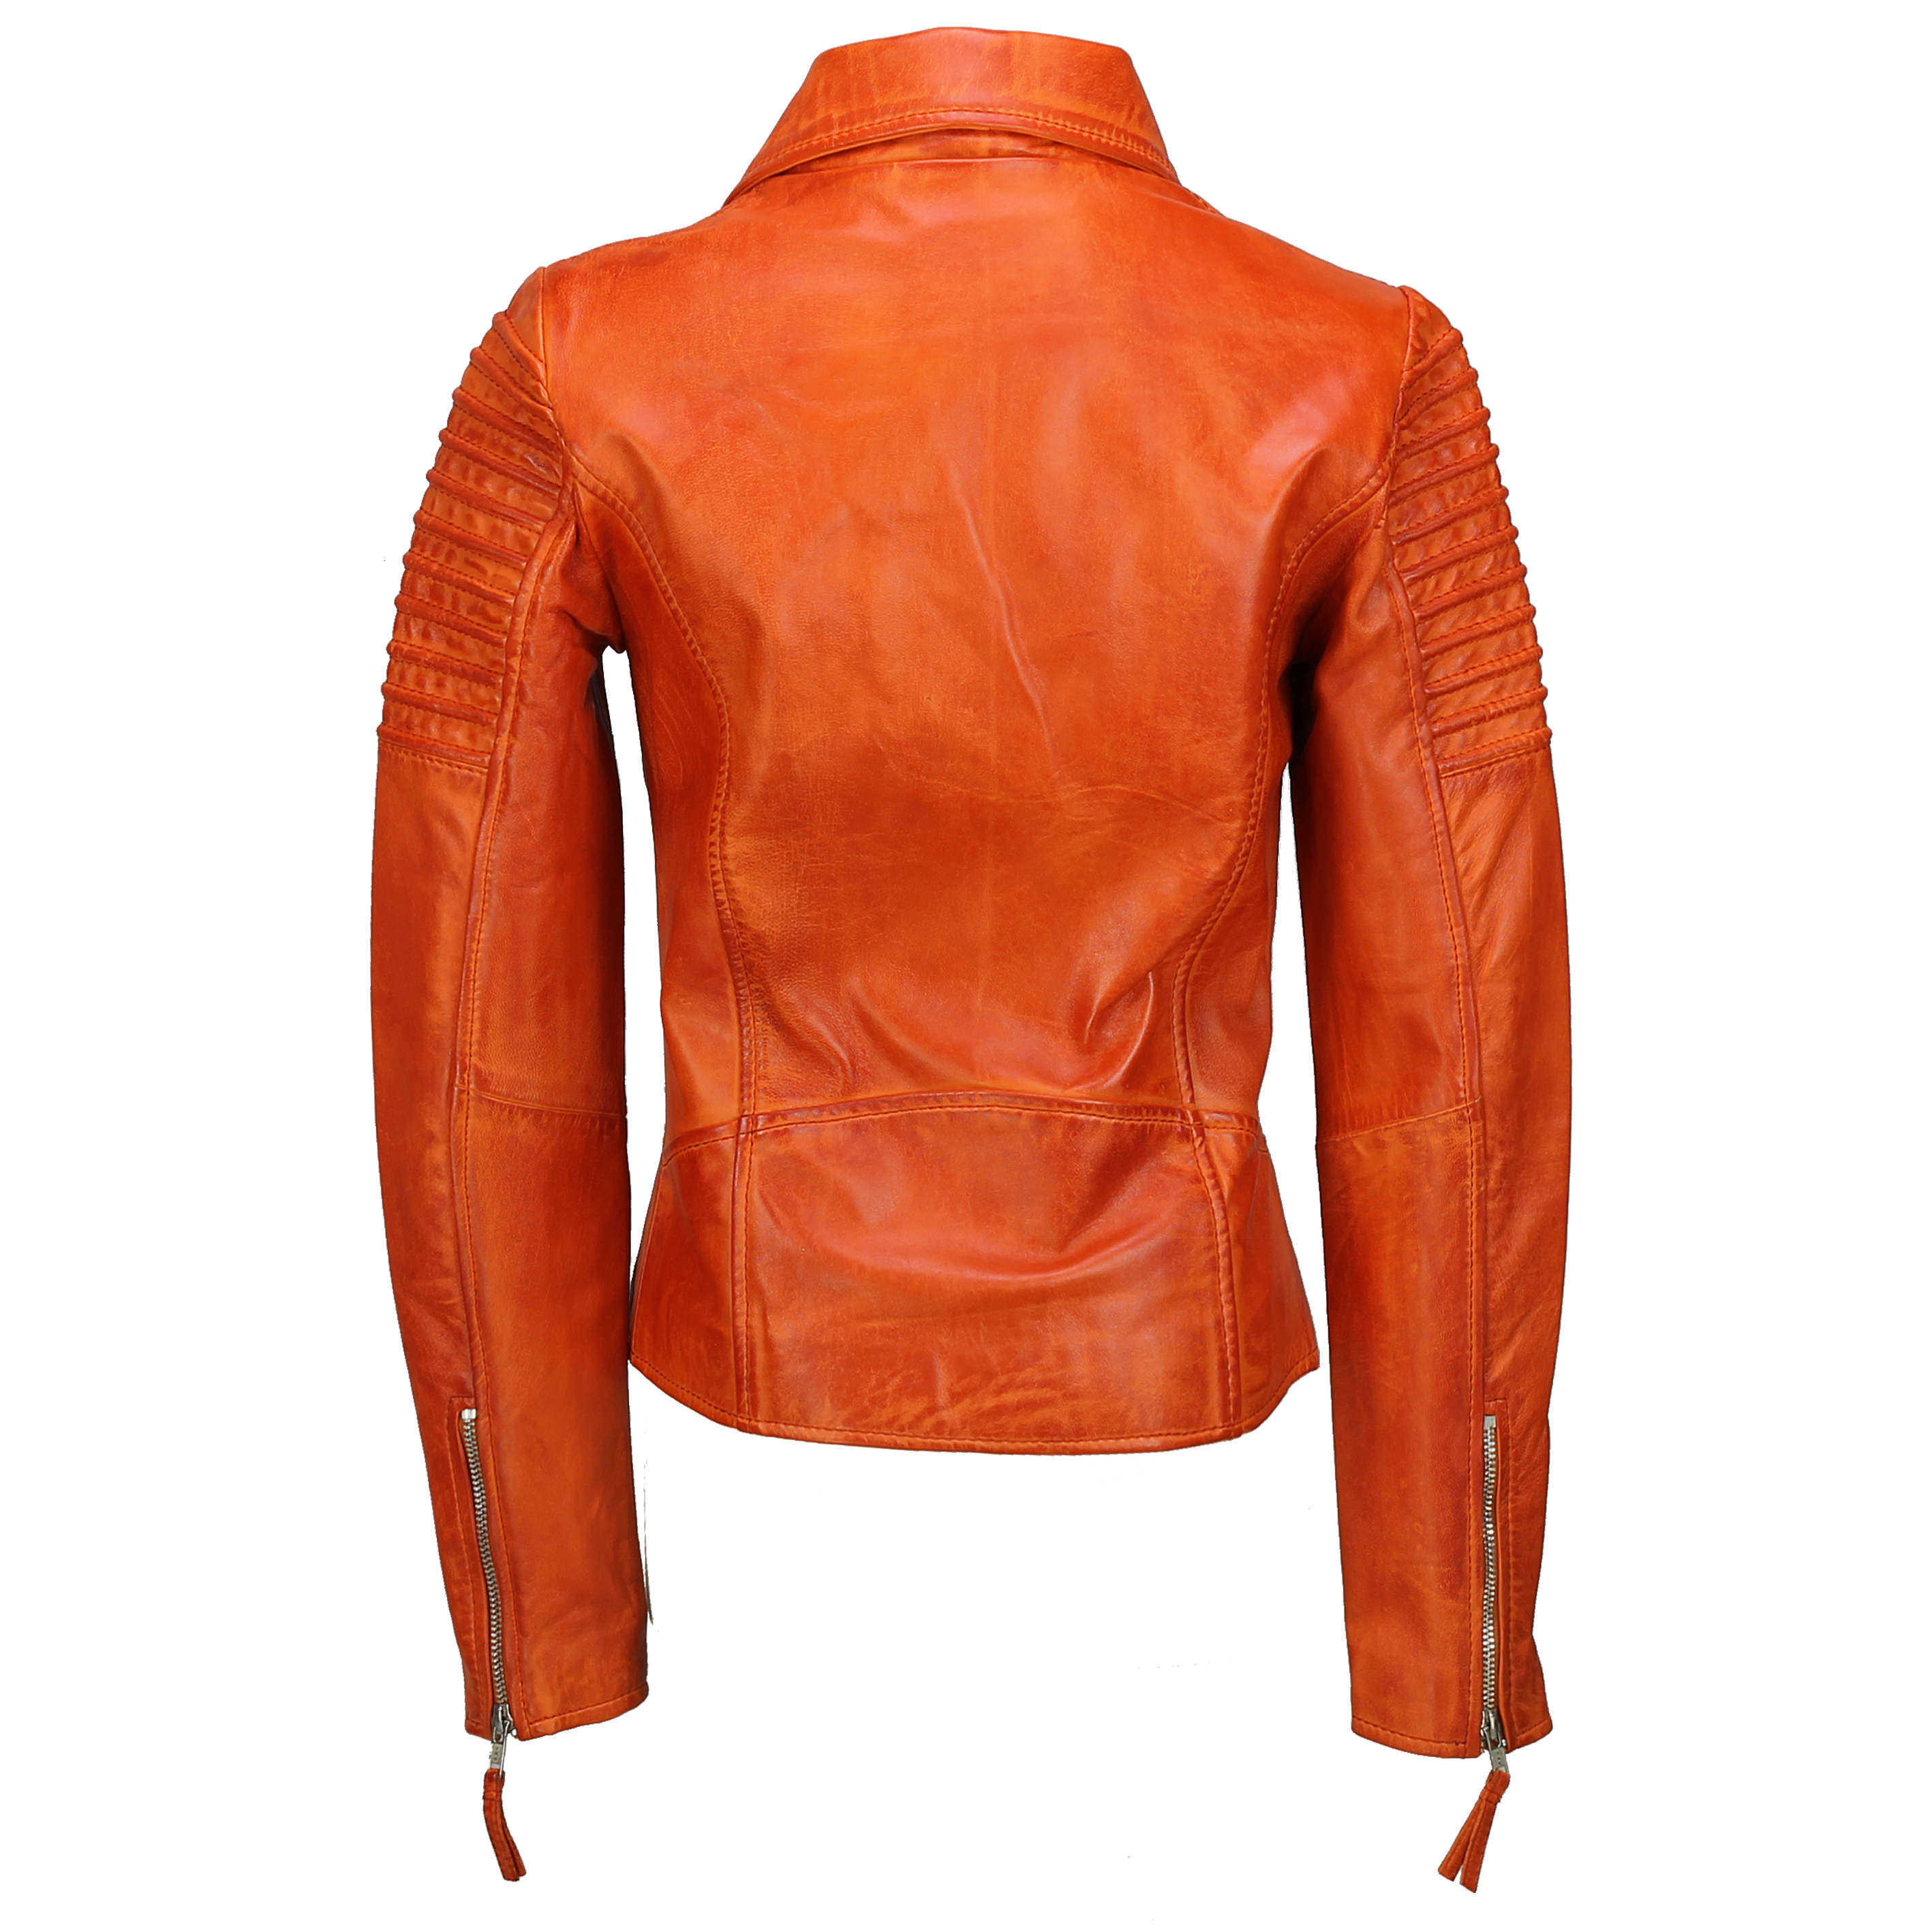 discount 73% J&S biker jacket WOMEN FASHION Jackets Biker jacket NO STYLE Yellow M 